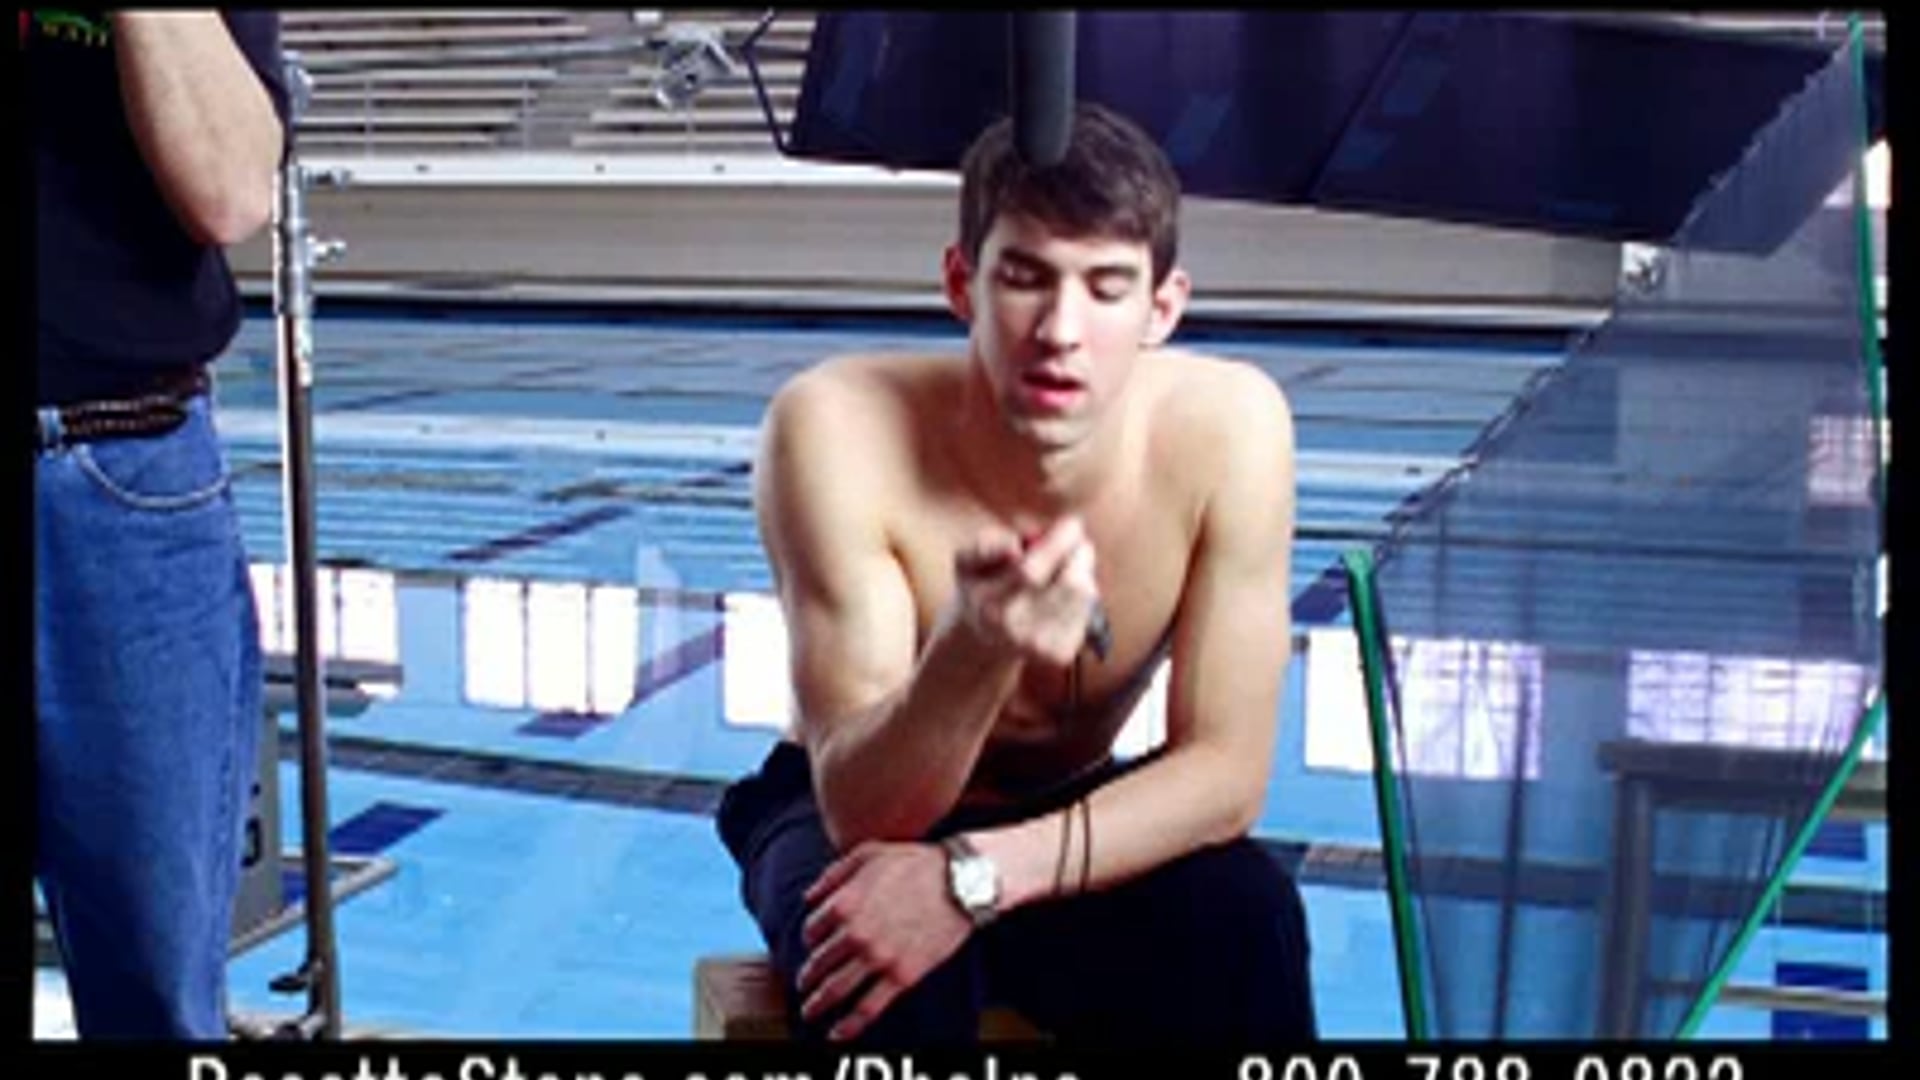 Rosetta Stone "Michael Phelps"